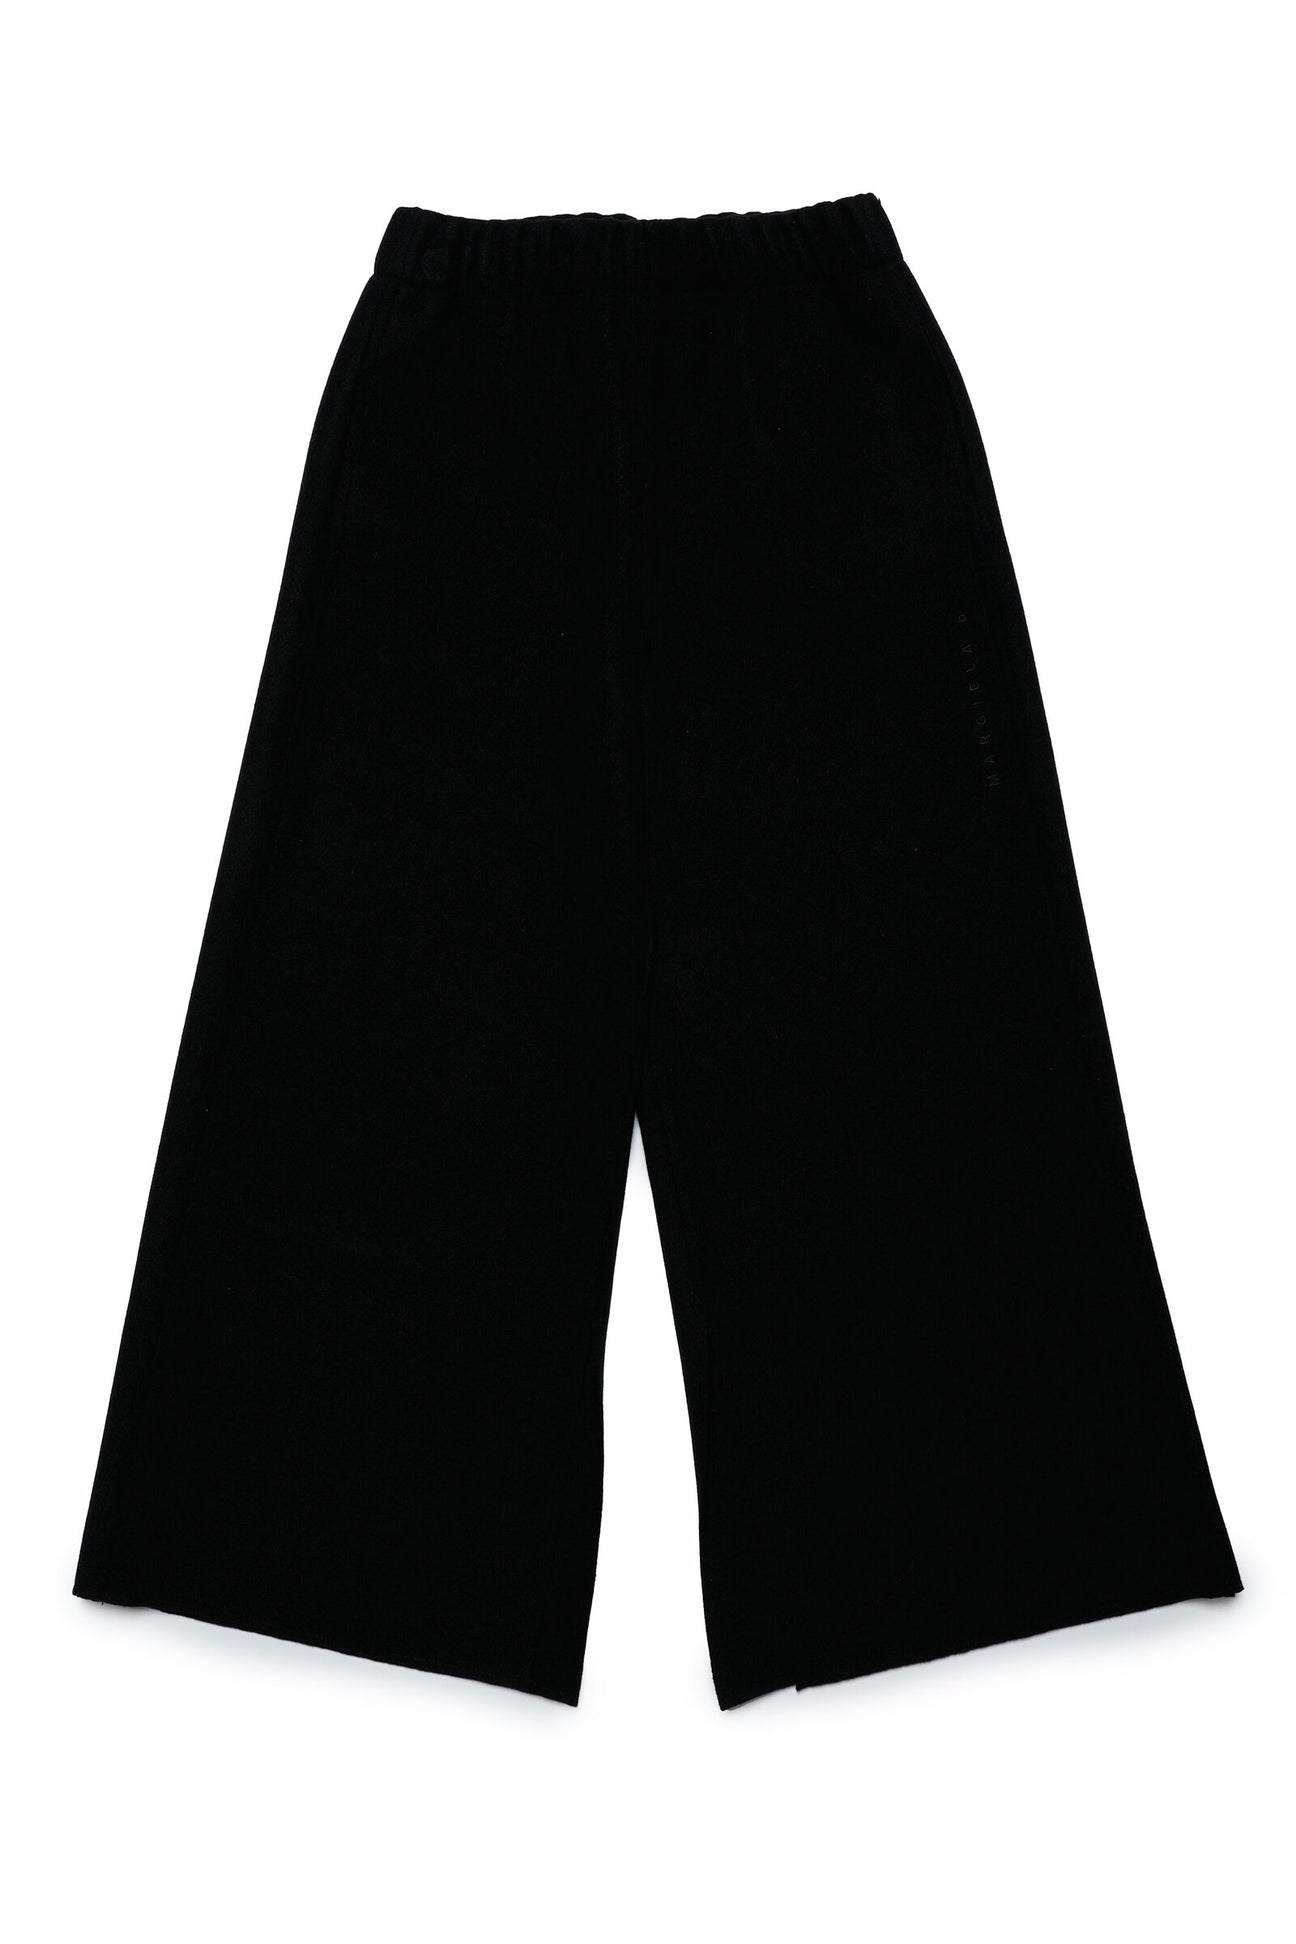 Cloth palazzo pants with raw-cut slits inside the bottom leg 